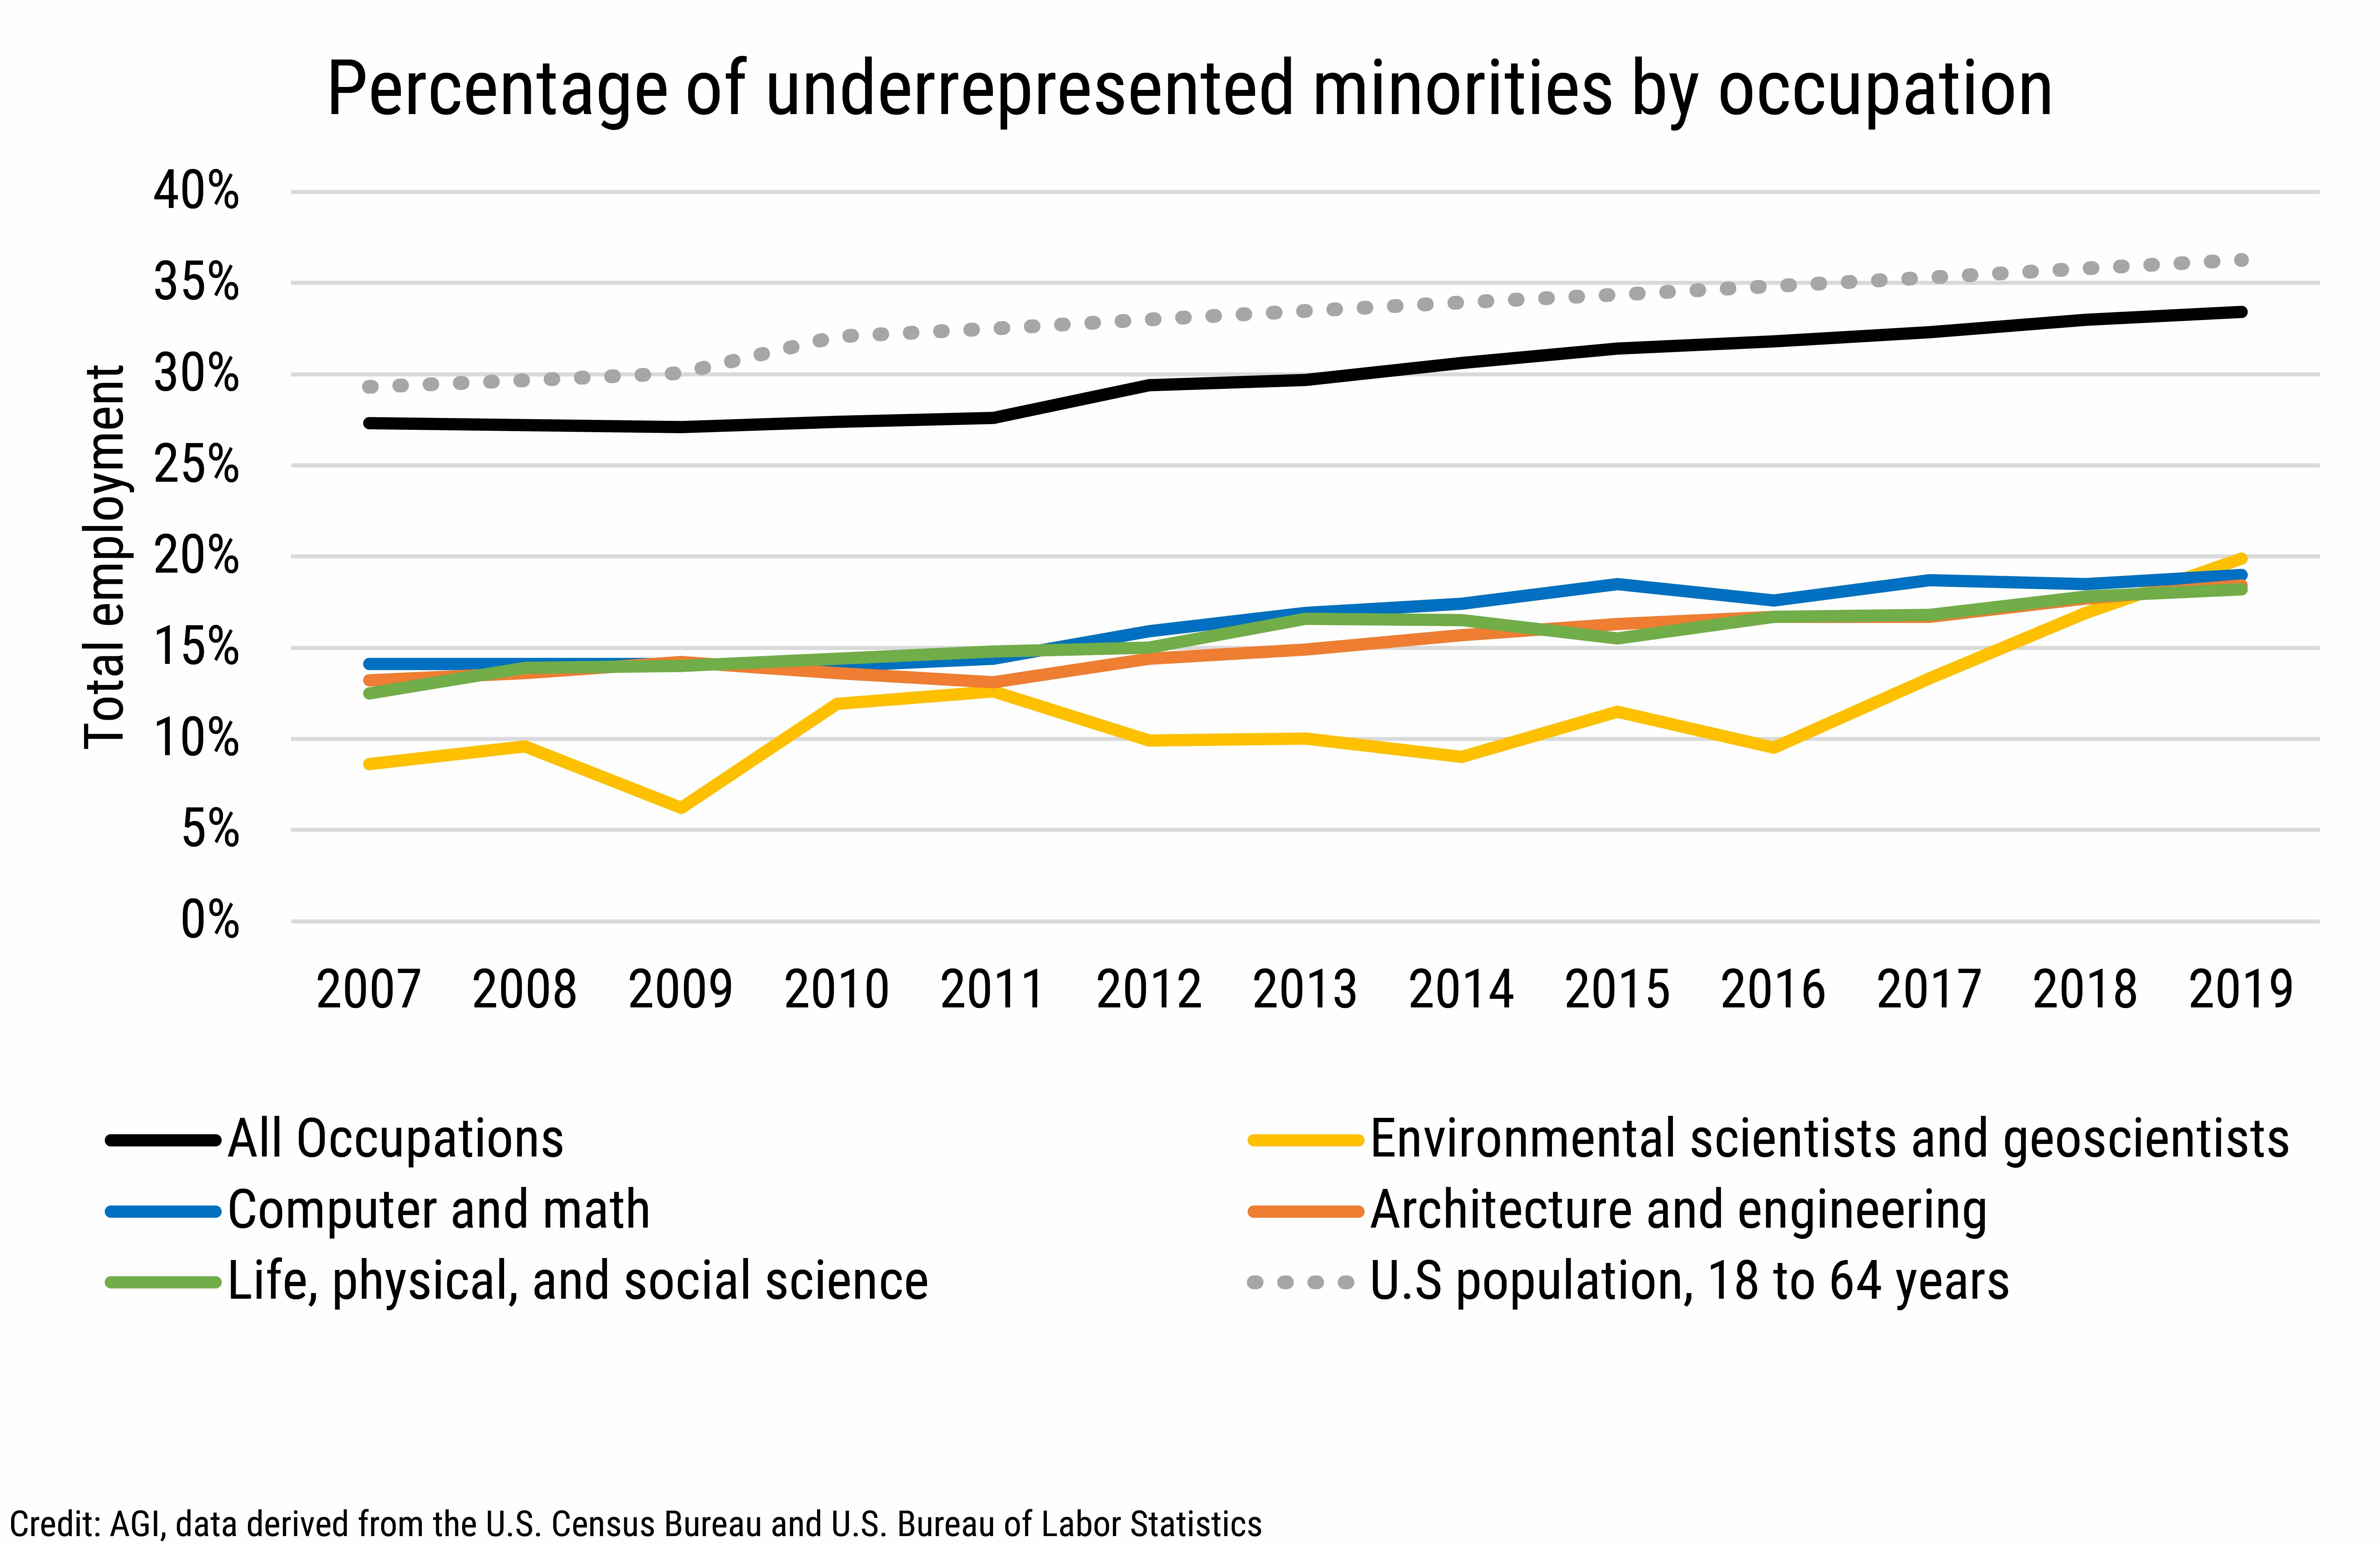 DB2020-023 chart03-Percentage of underrepresented minorities by occupation (Credit: AGI, data derived from the U.S. Census Bureau and U.S. Bureau of Labor Statistics)